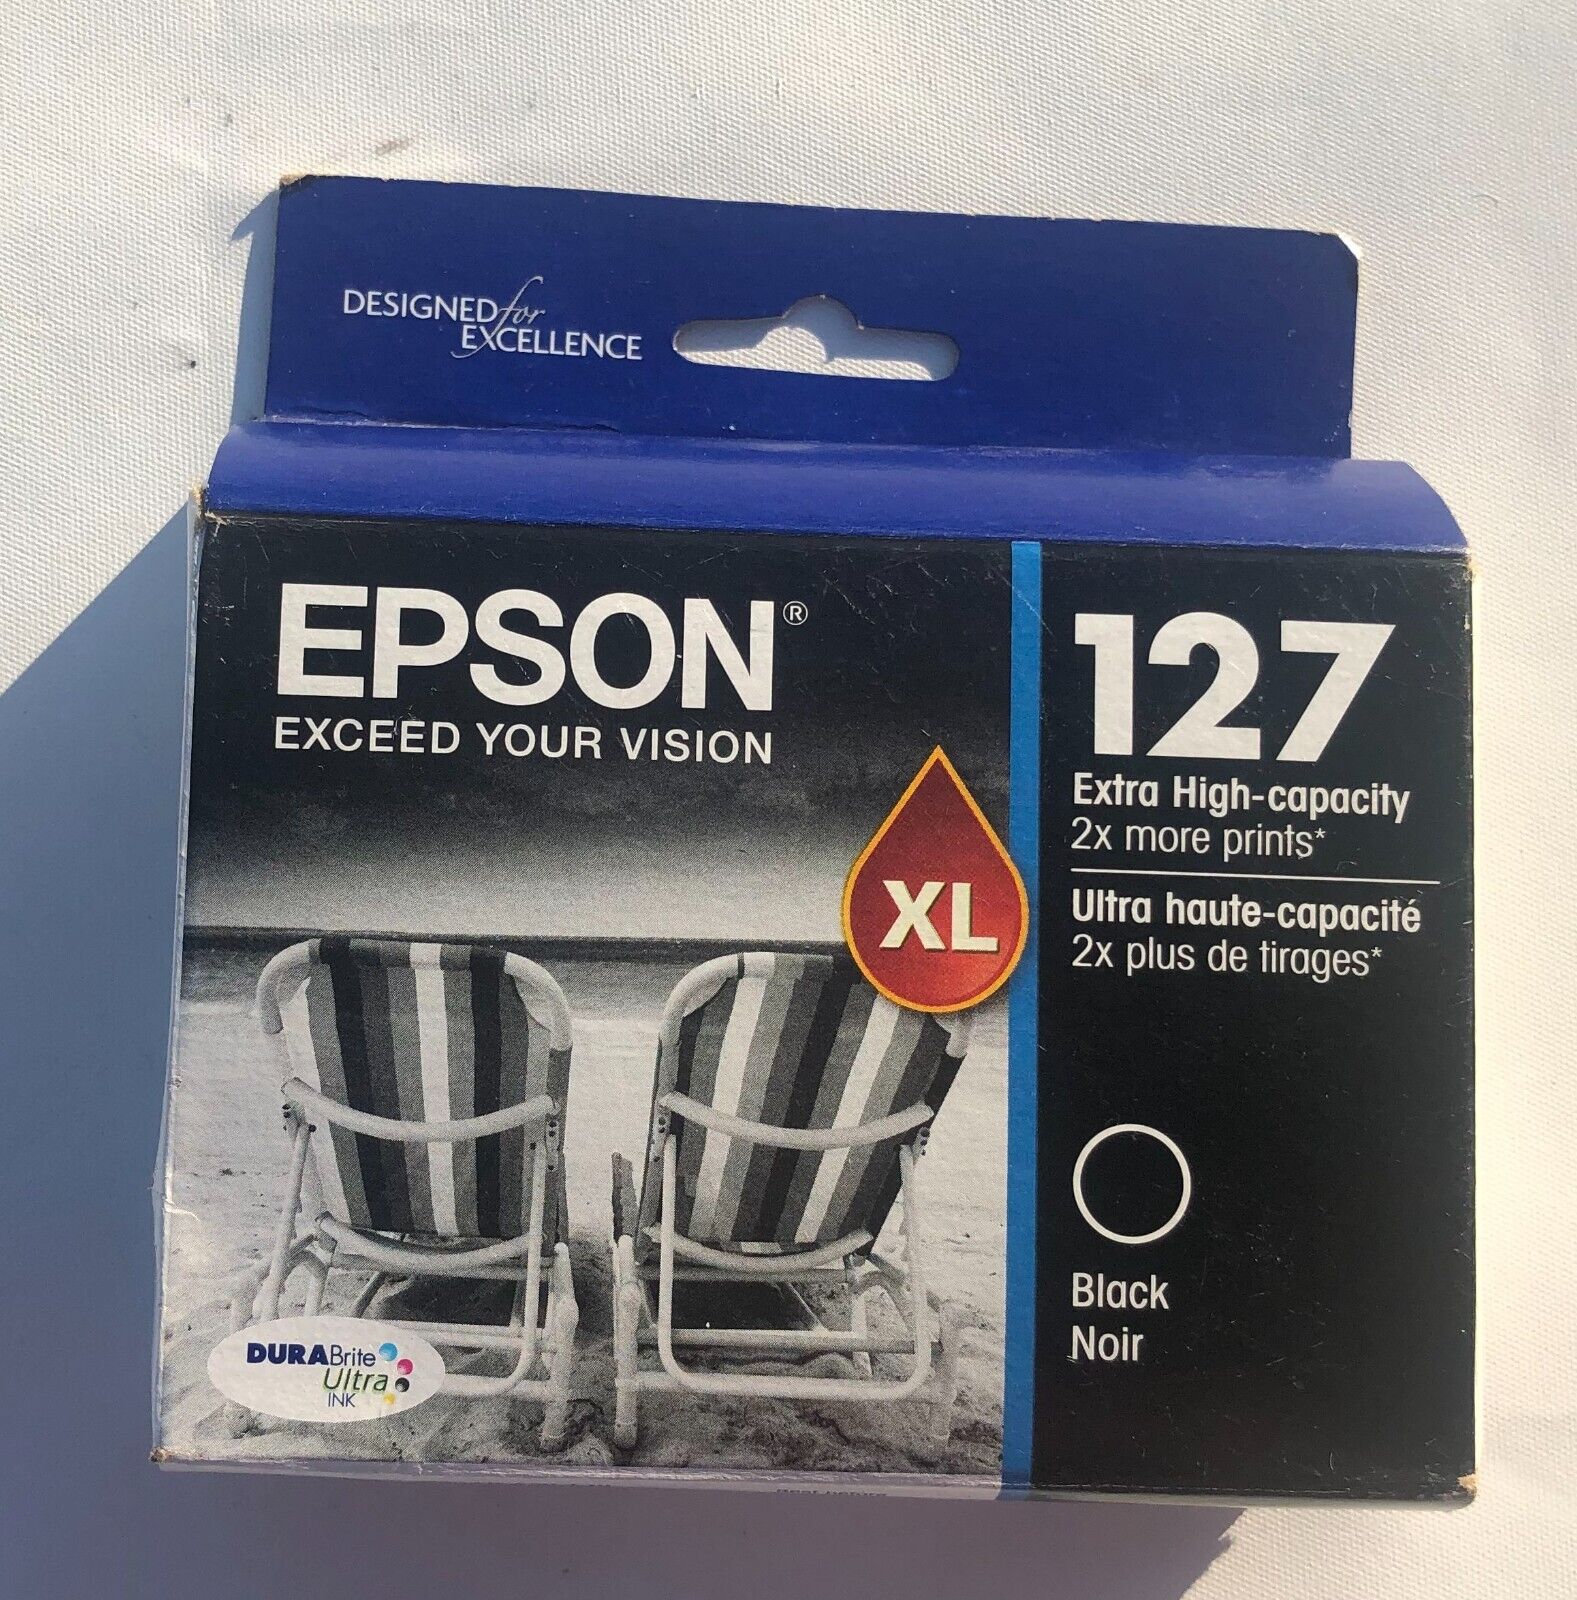 Epson 127 XL Black Printer Ink Cartridge High Capacity ~ EXP 04/22